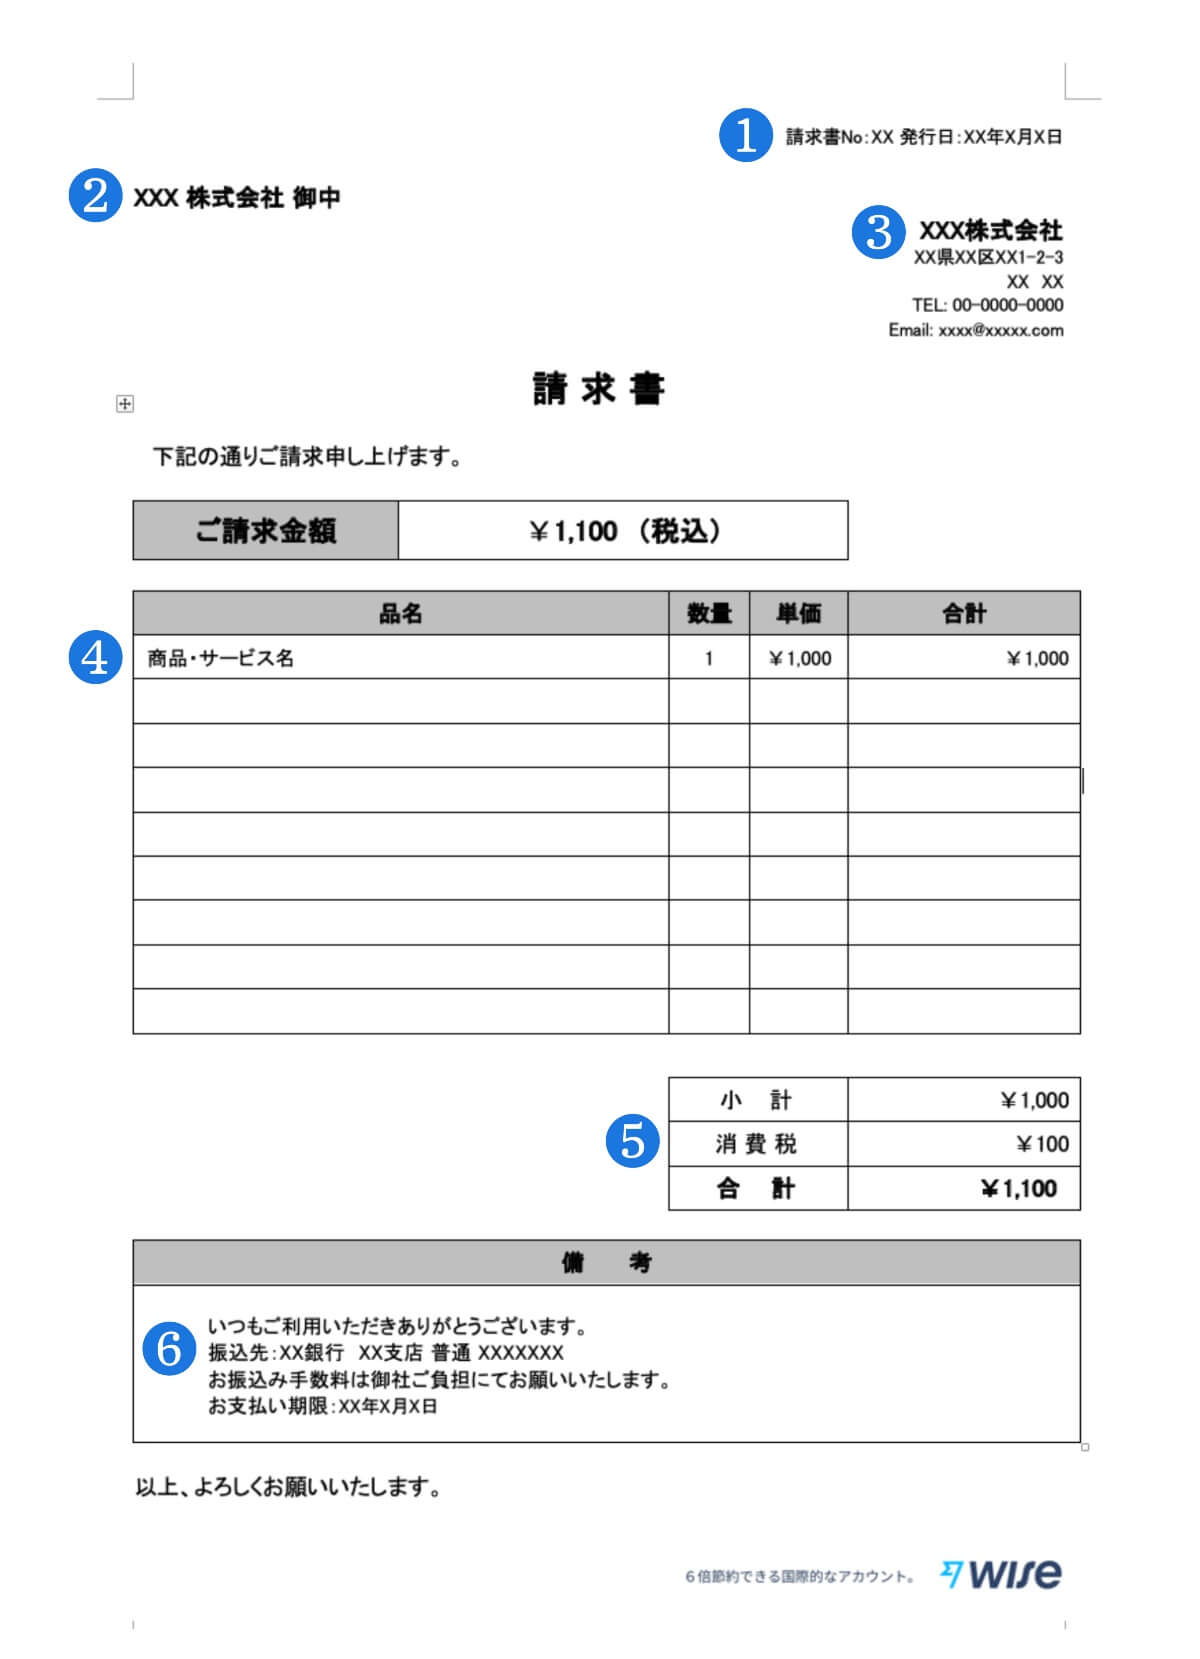 japanese-invoice